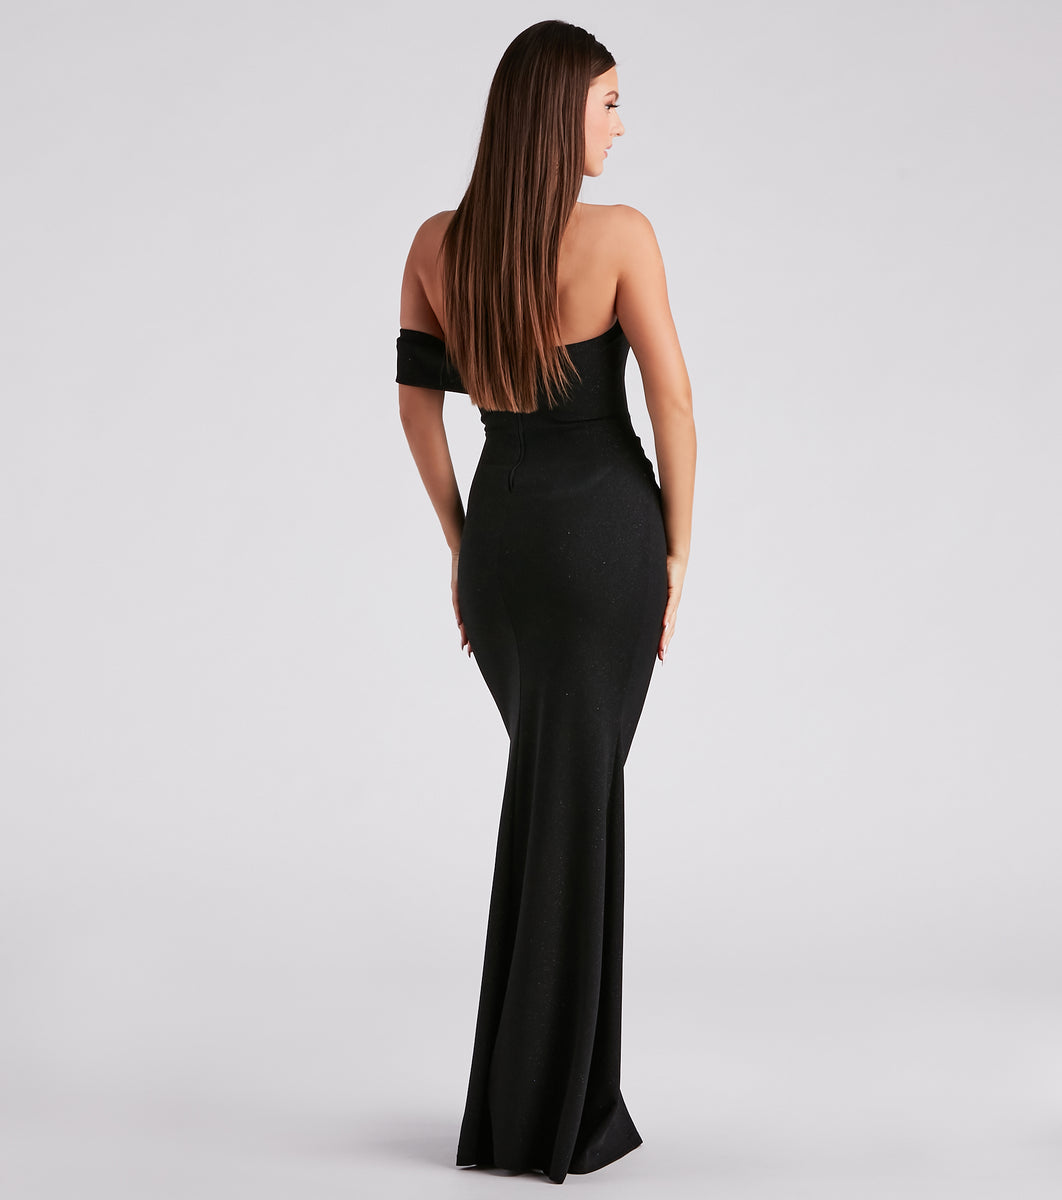 Windsor Marnie Formal Glitter Crepe A-Line Dress